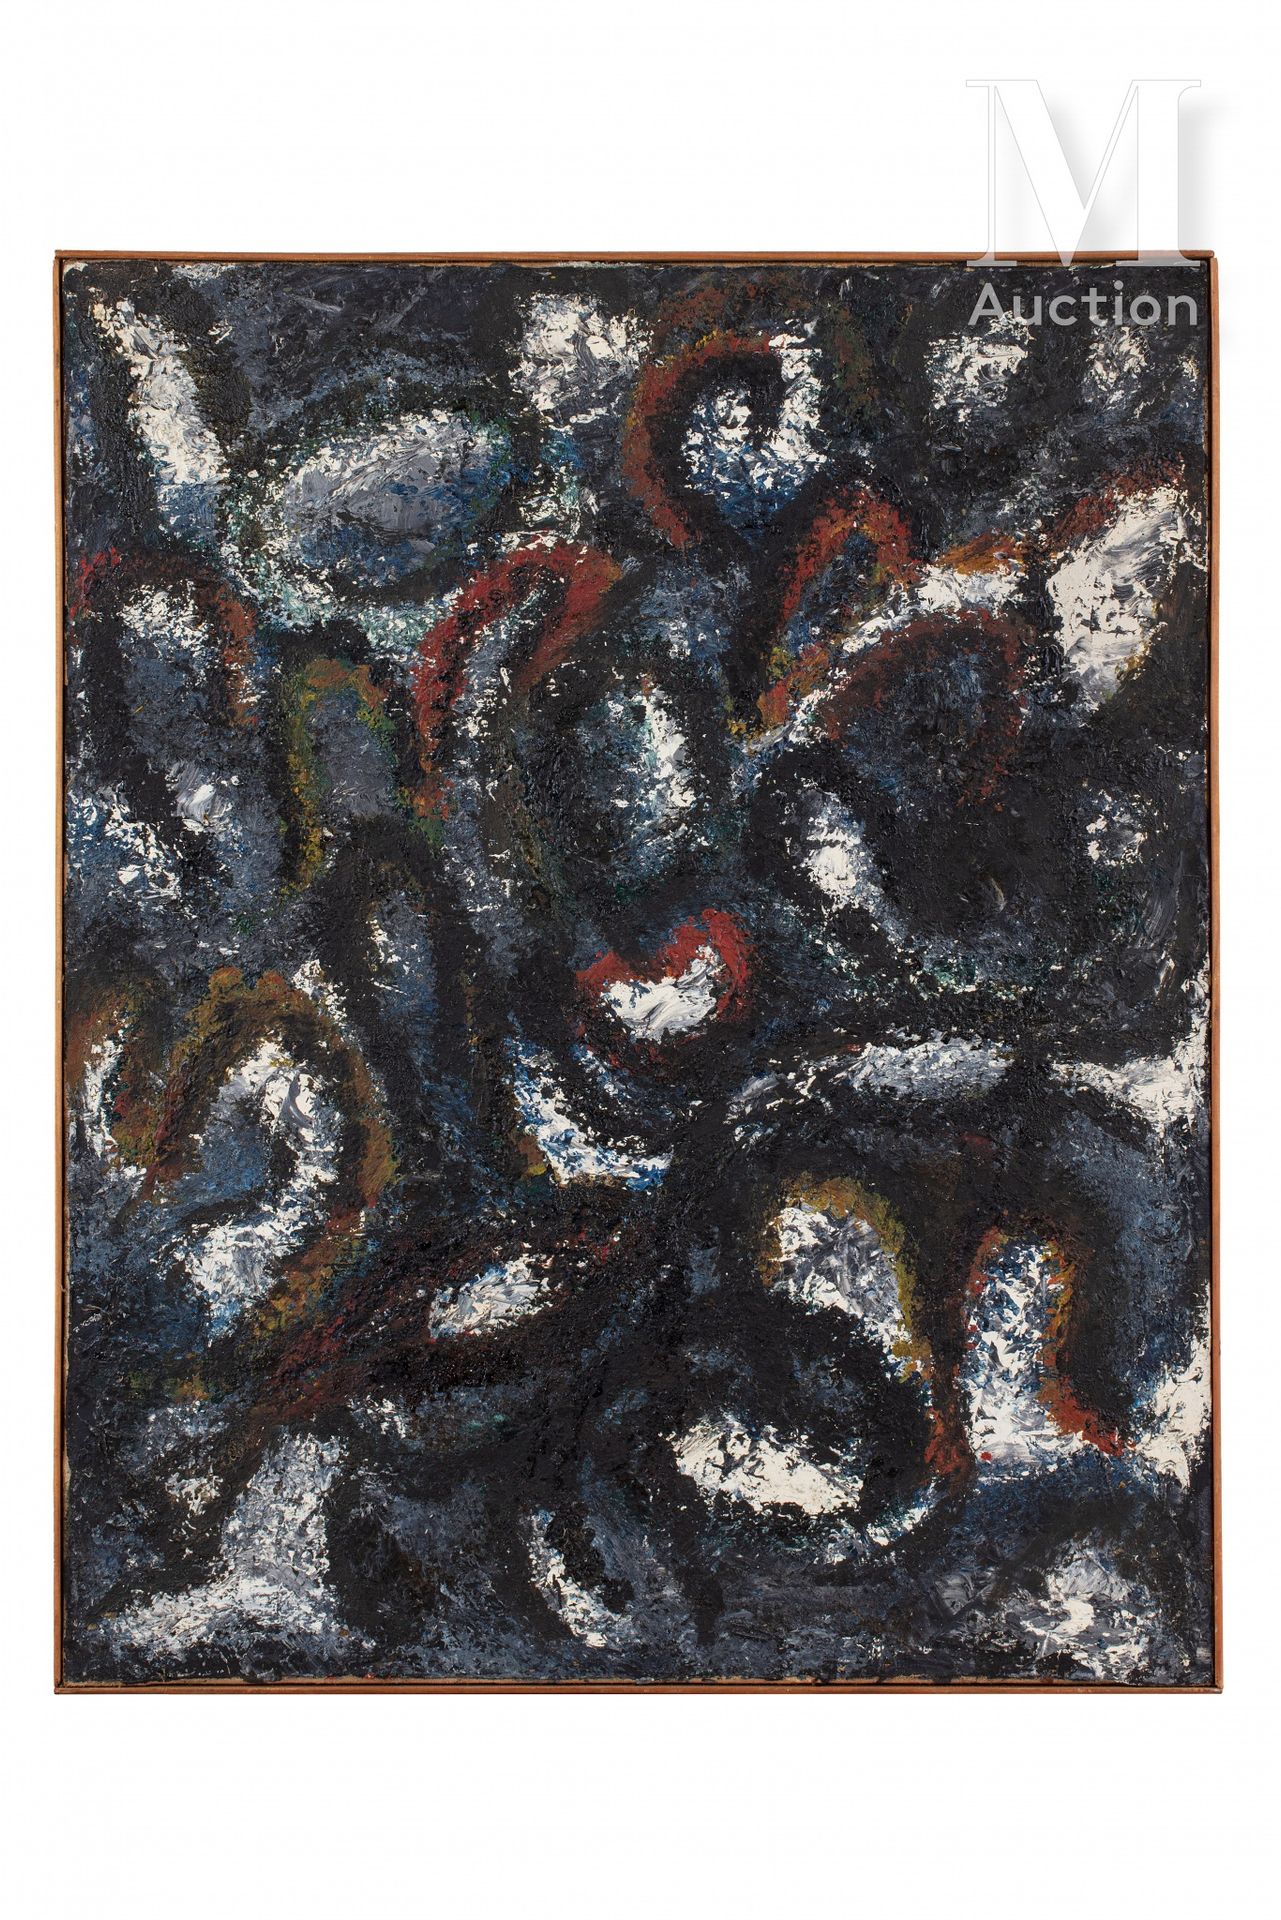 Norbert PLEIEF (né en 1933) K.131, 1959-1960

Óleo sobre lienzo firmado, fechado&hellip;